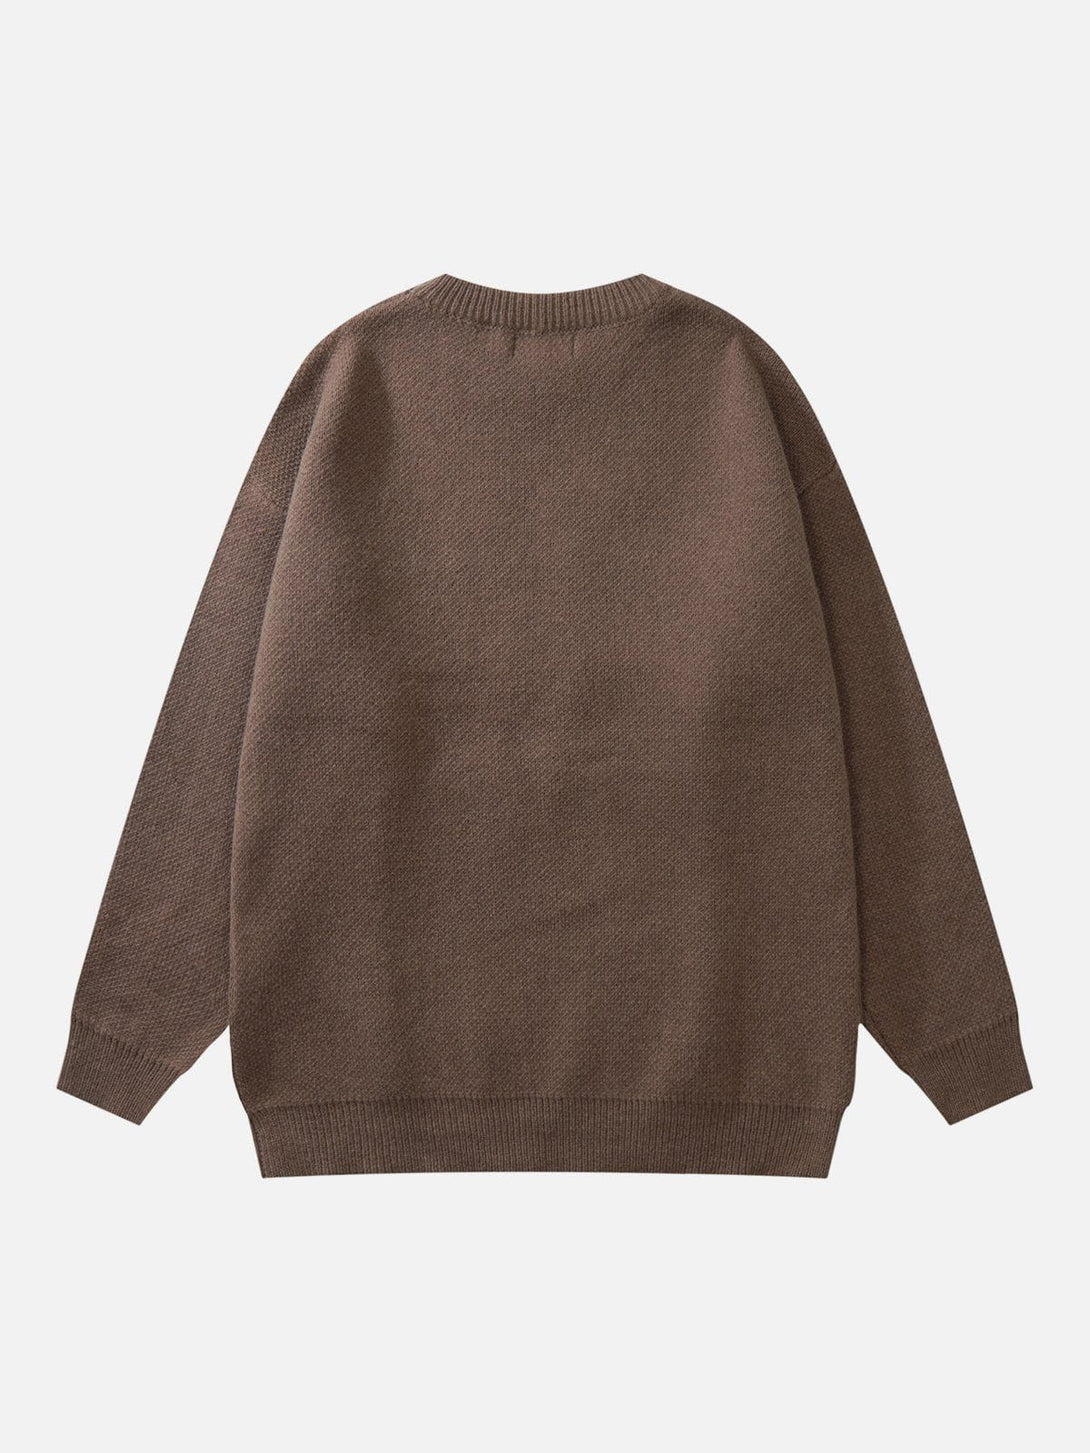 Majesda® - Flocked Letter Sweater outfit ideas streetwear fashion